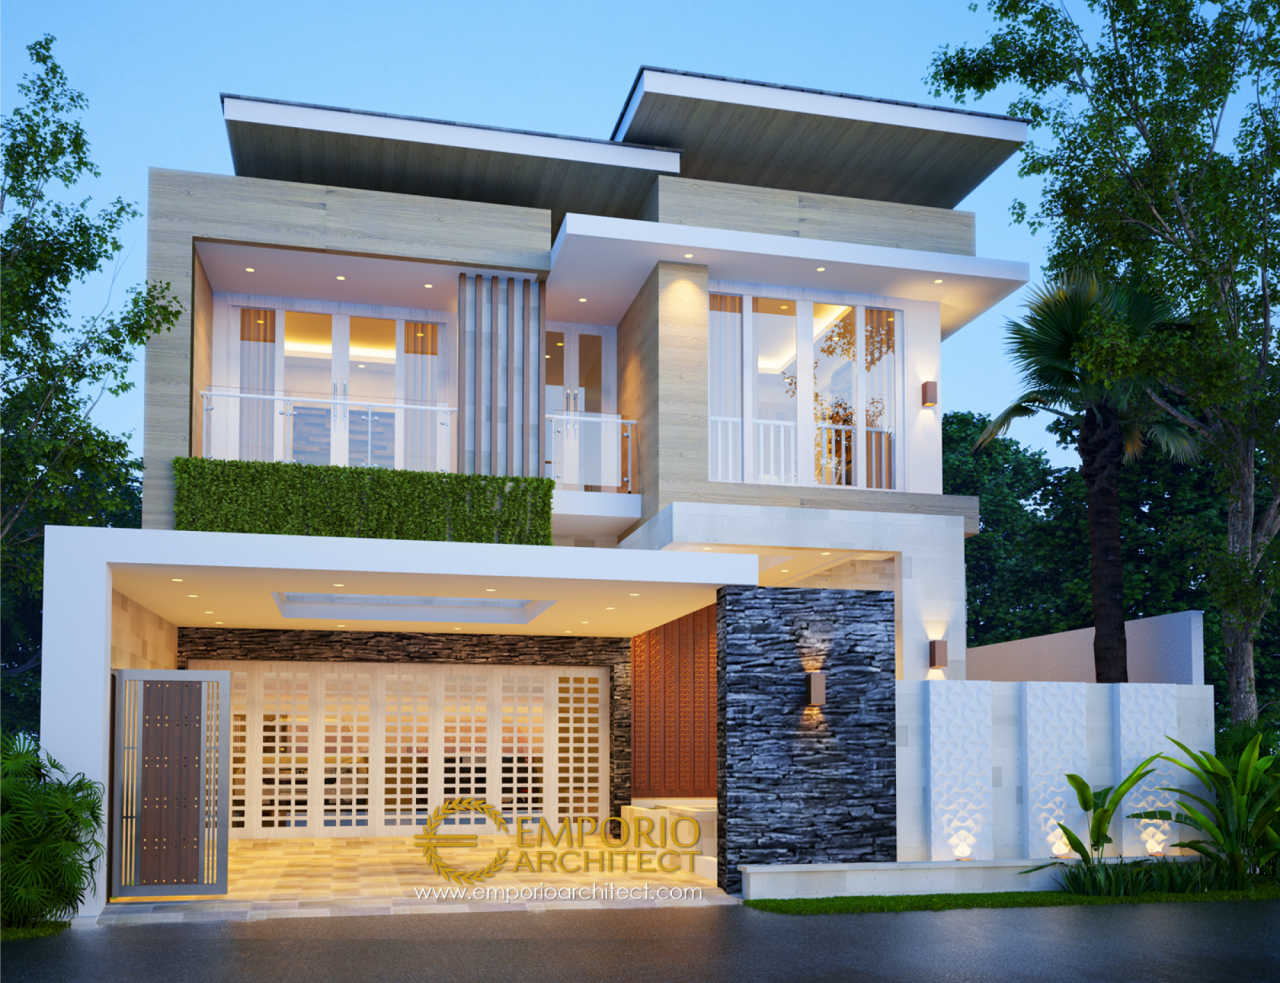  Desain  Rumah  Modern 2 Lantai Bapak Dwi Irawan di Cirebon 